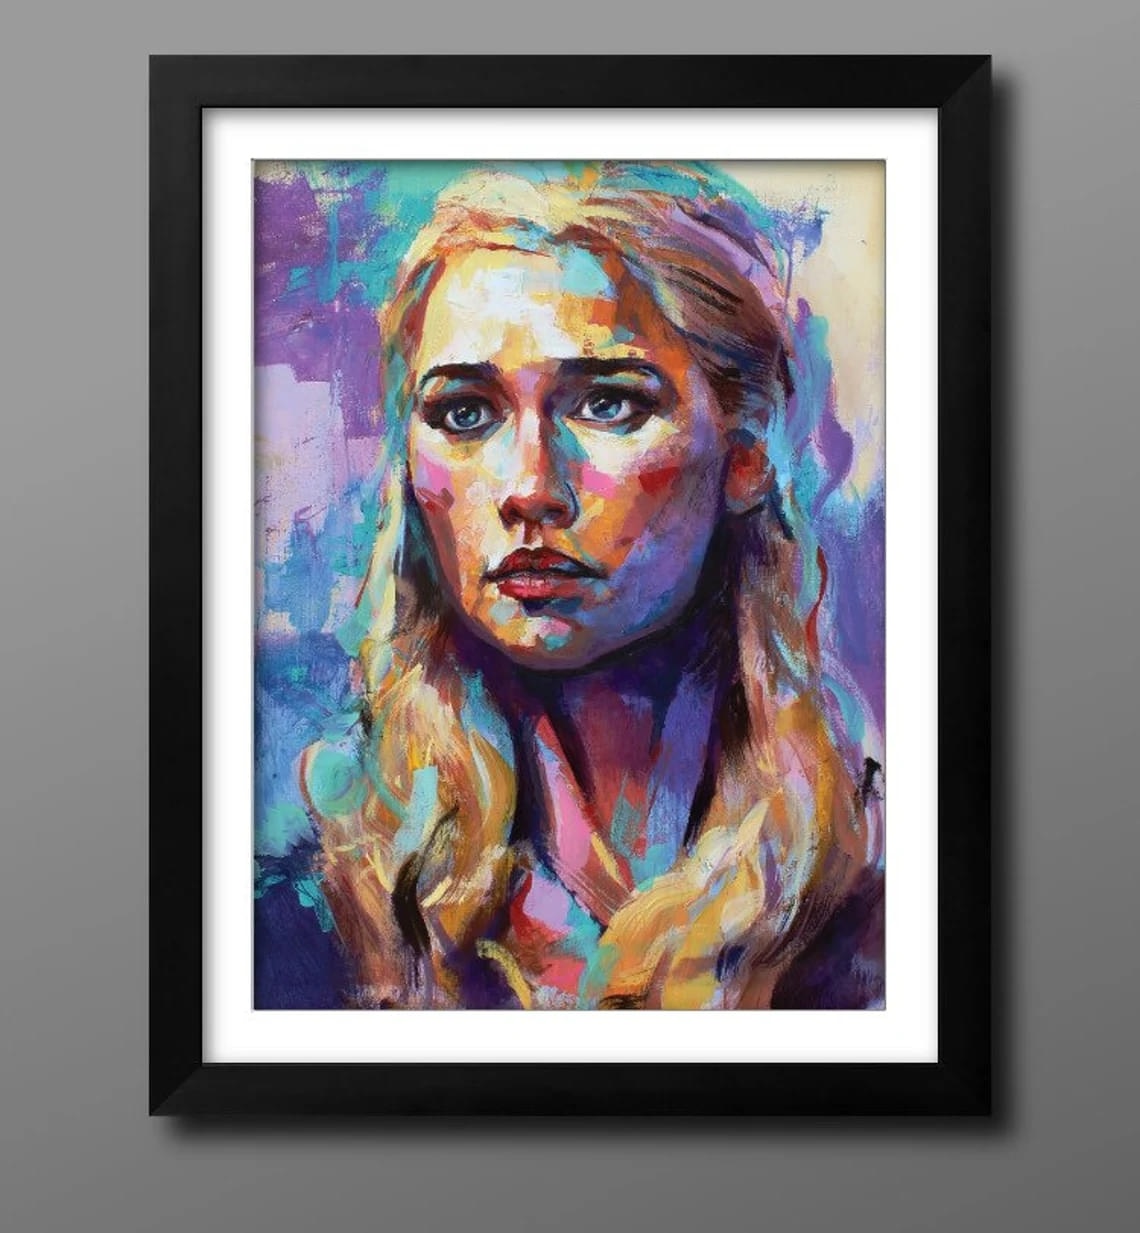 "Daenerys Targaryen" - Game of Thrones Portraits Artwork Sample on Wall